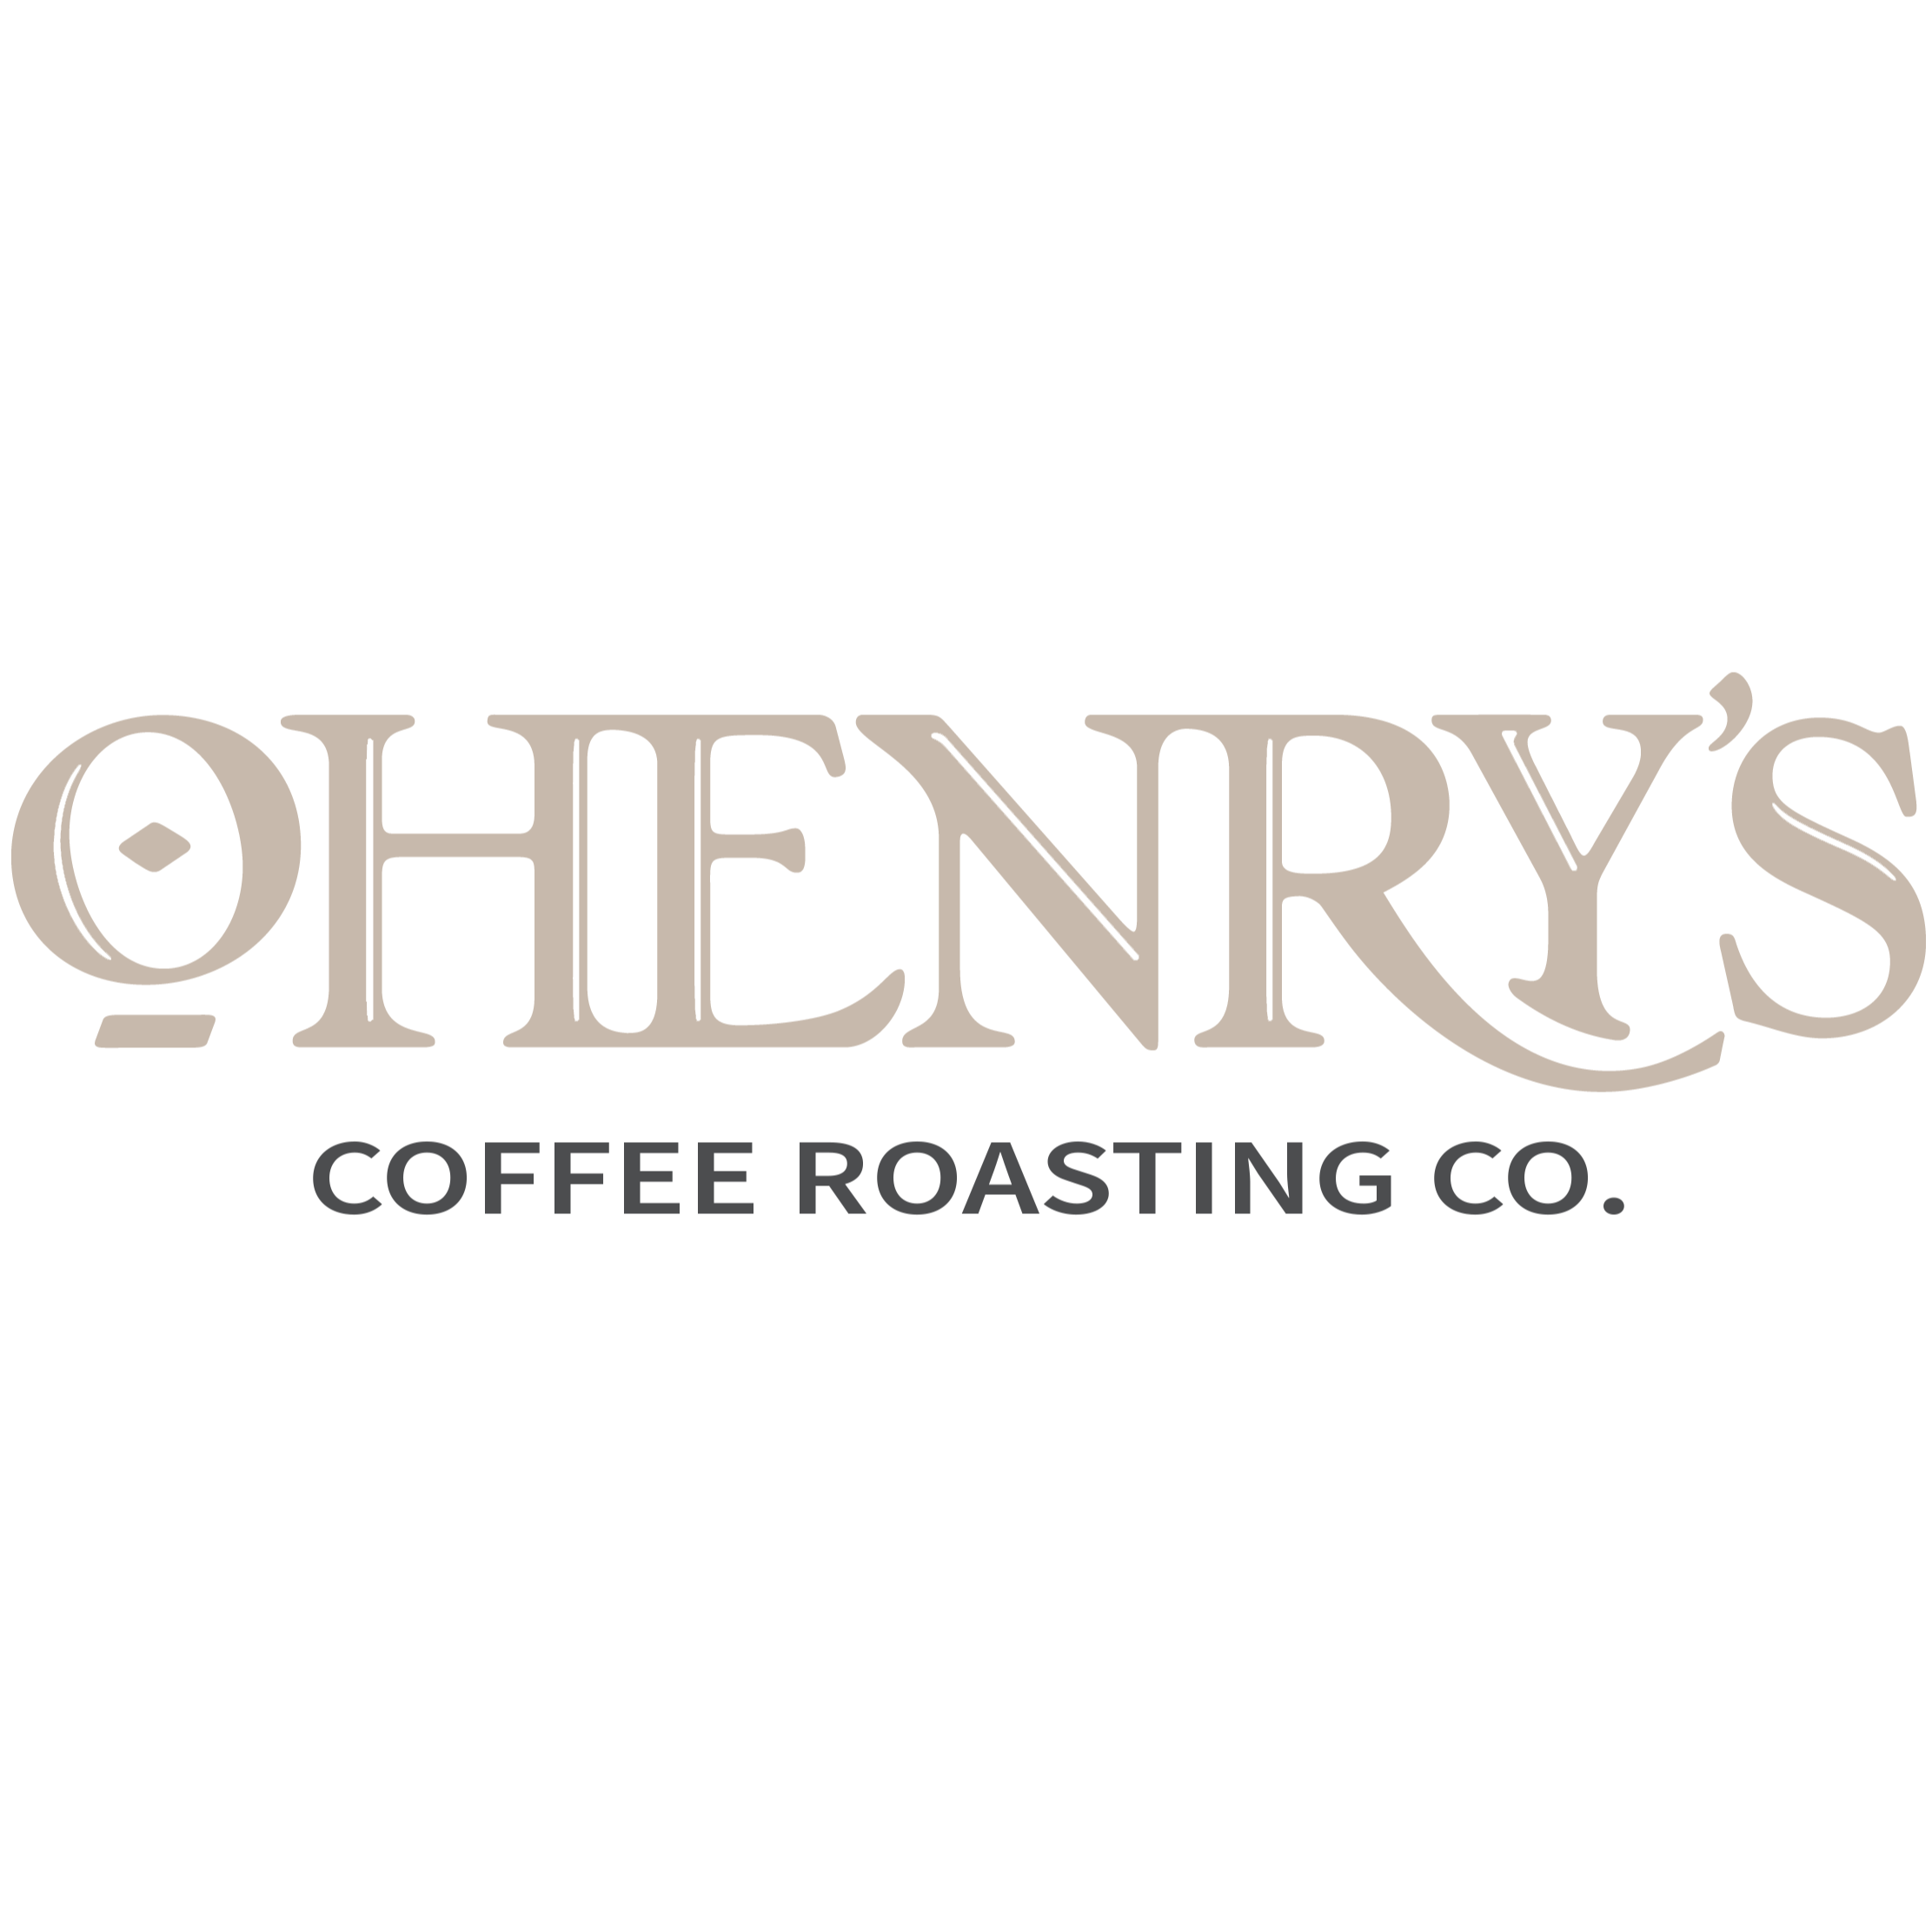 OHenry's Coffee Roasting Company Logo